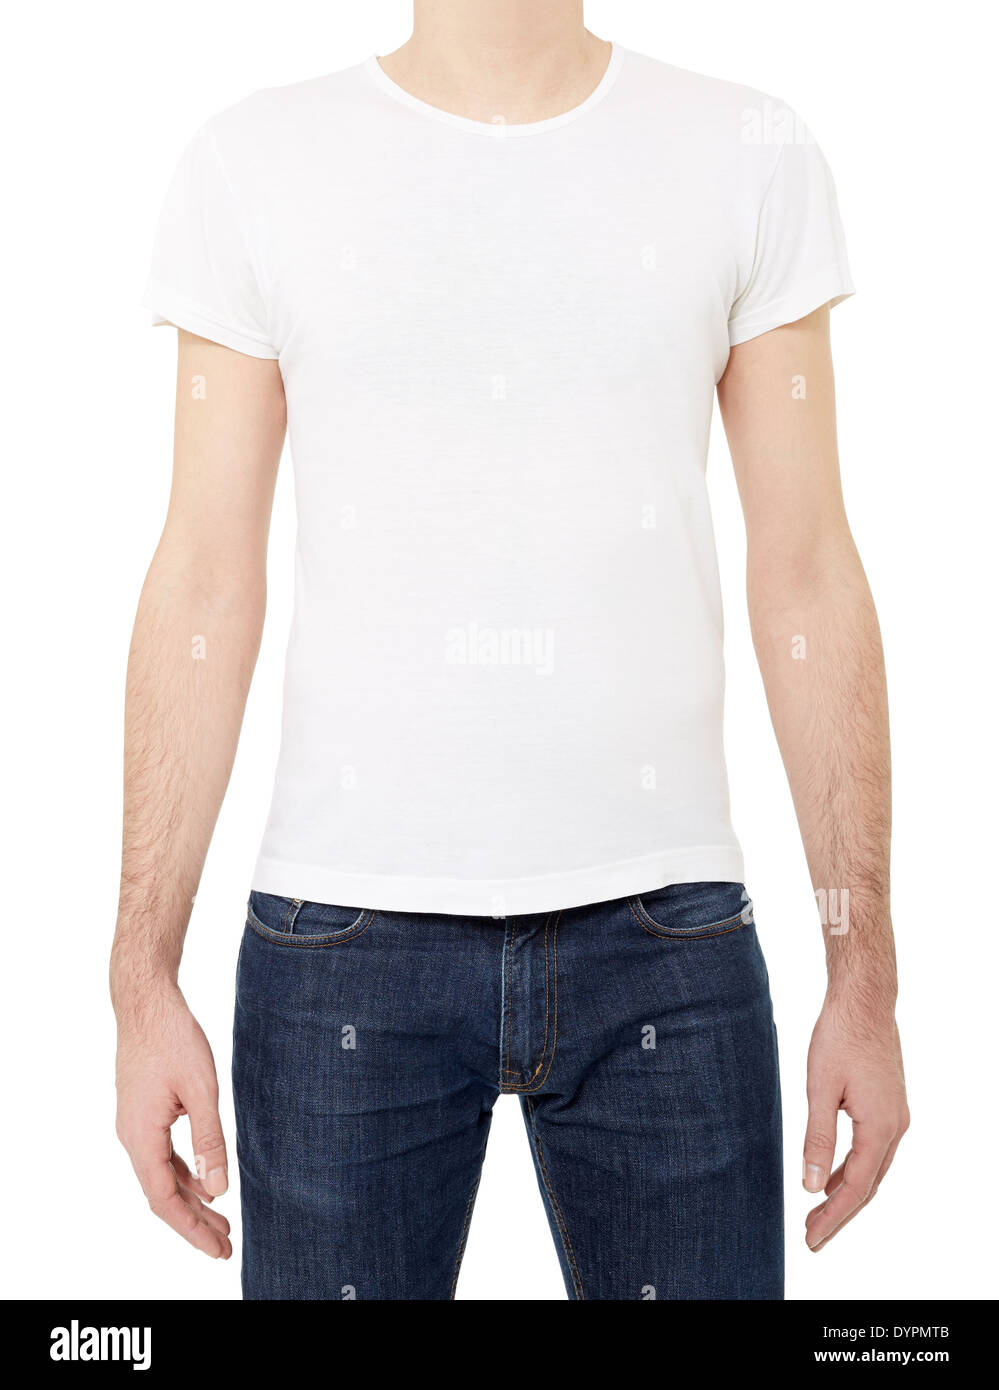 Man wearing white t-shirt Stock Photo